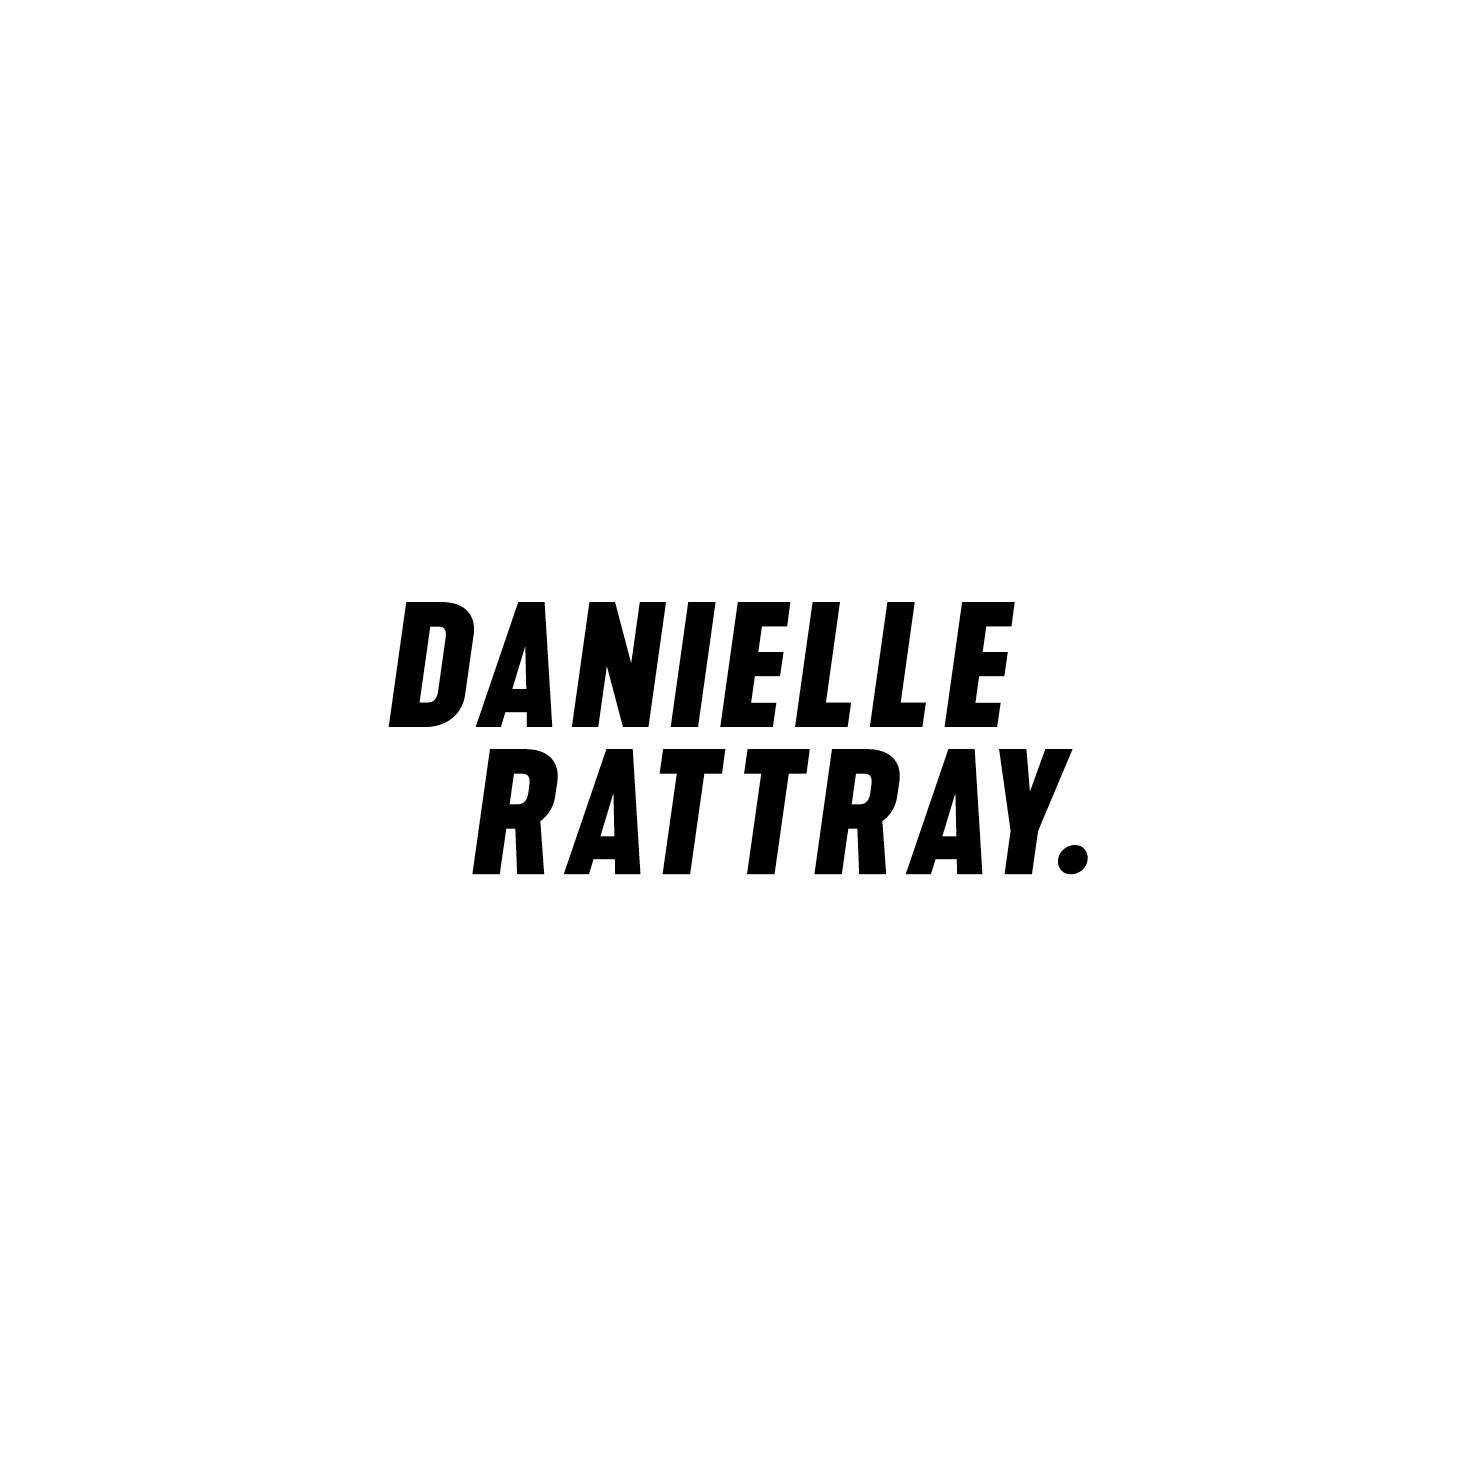 Danielle Rattray logo